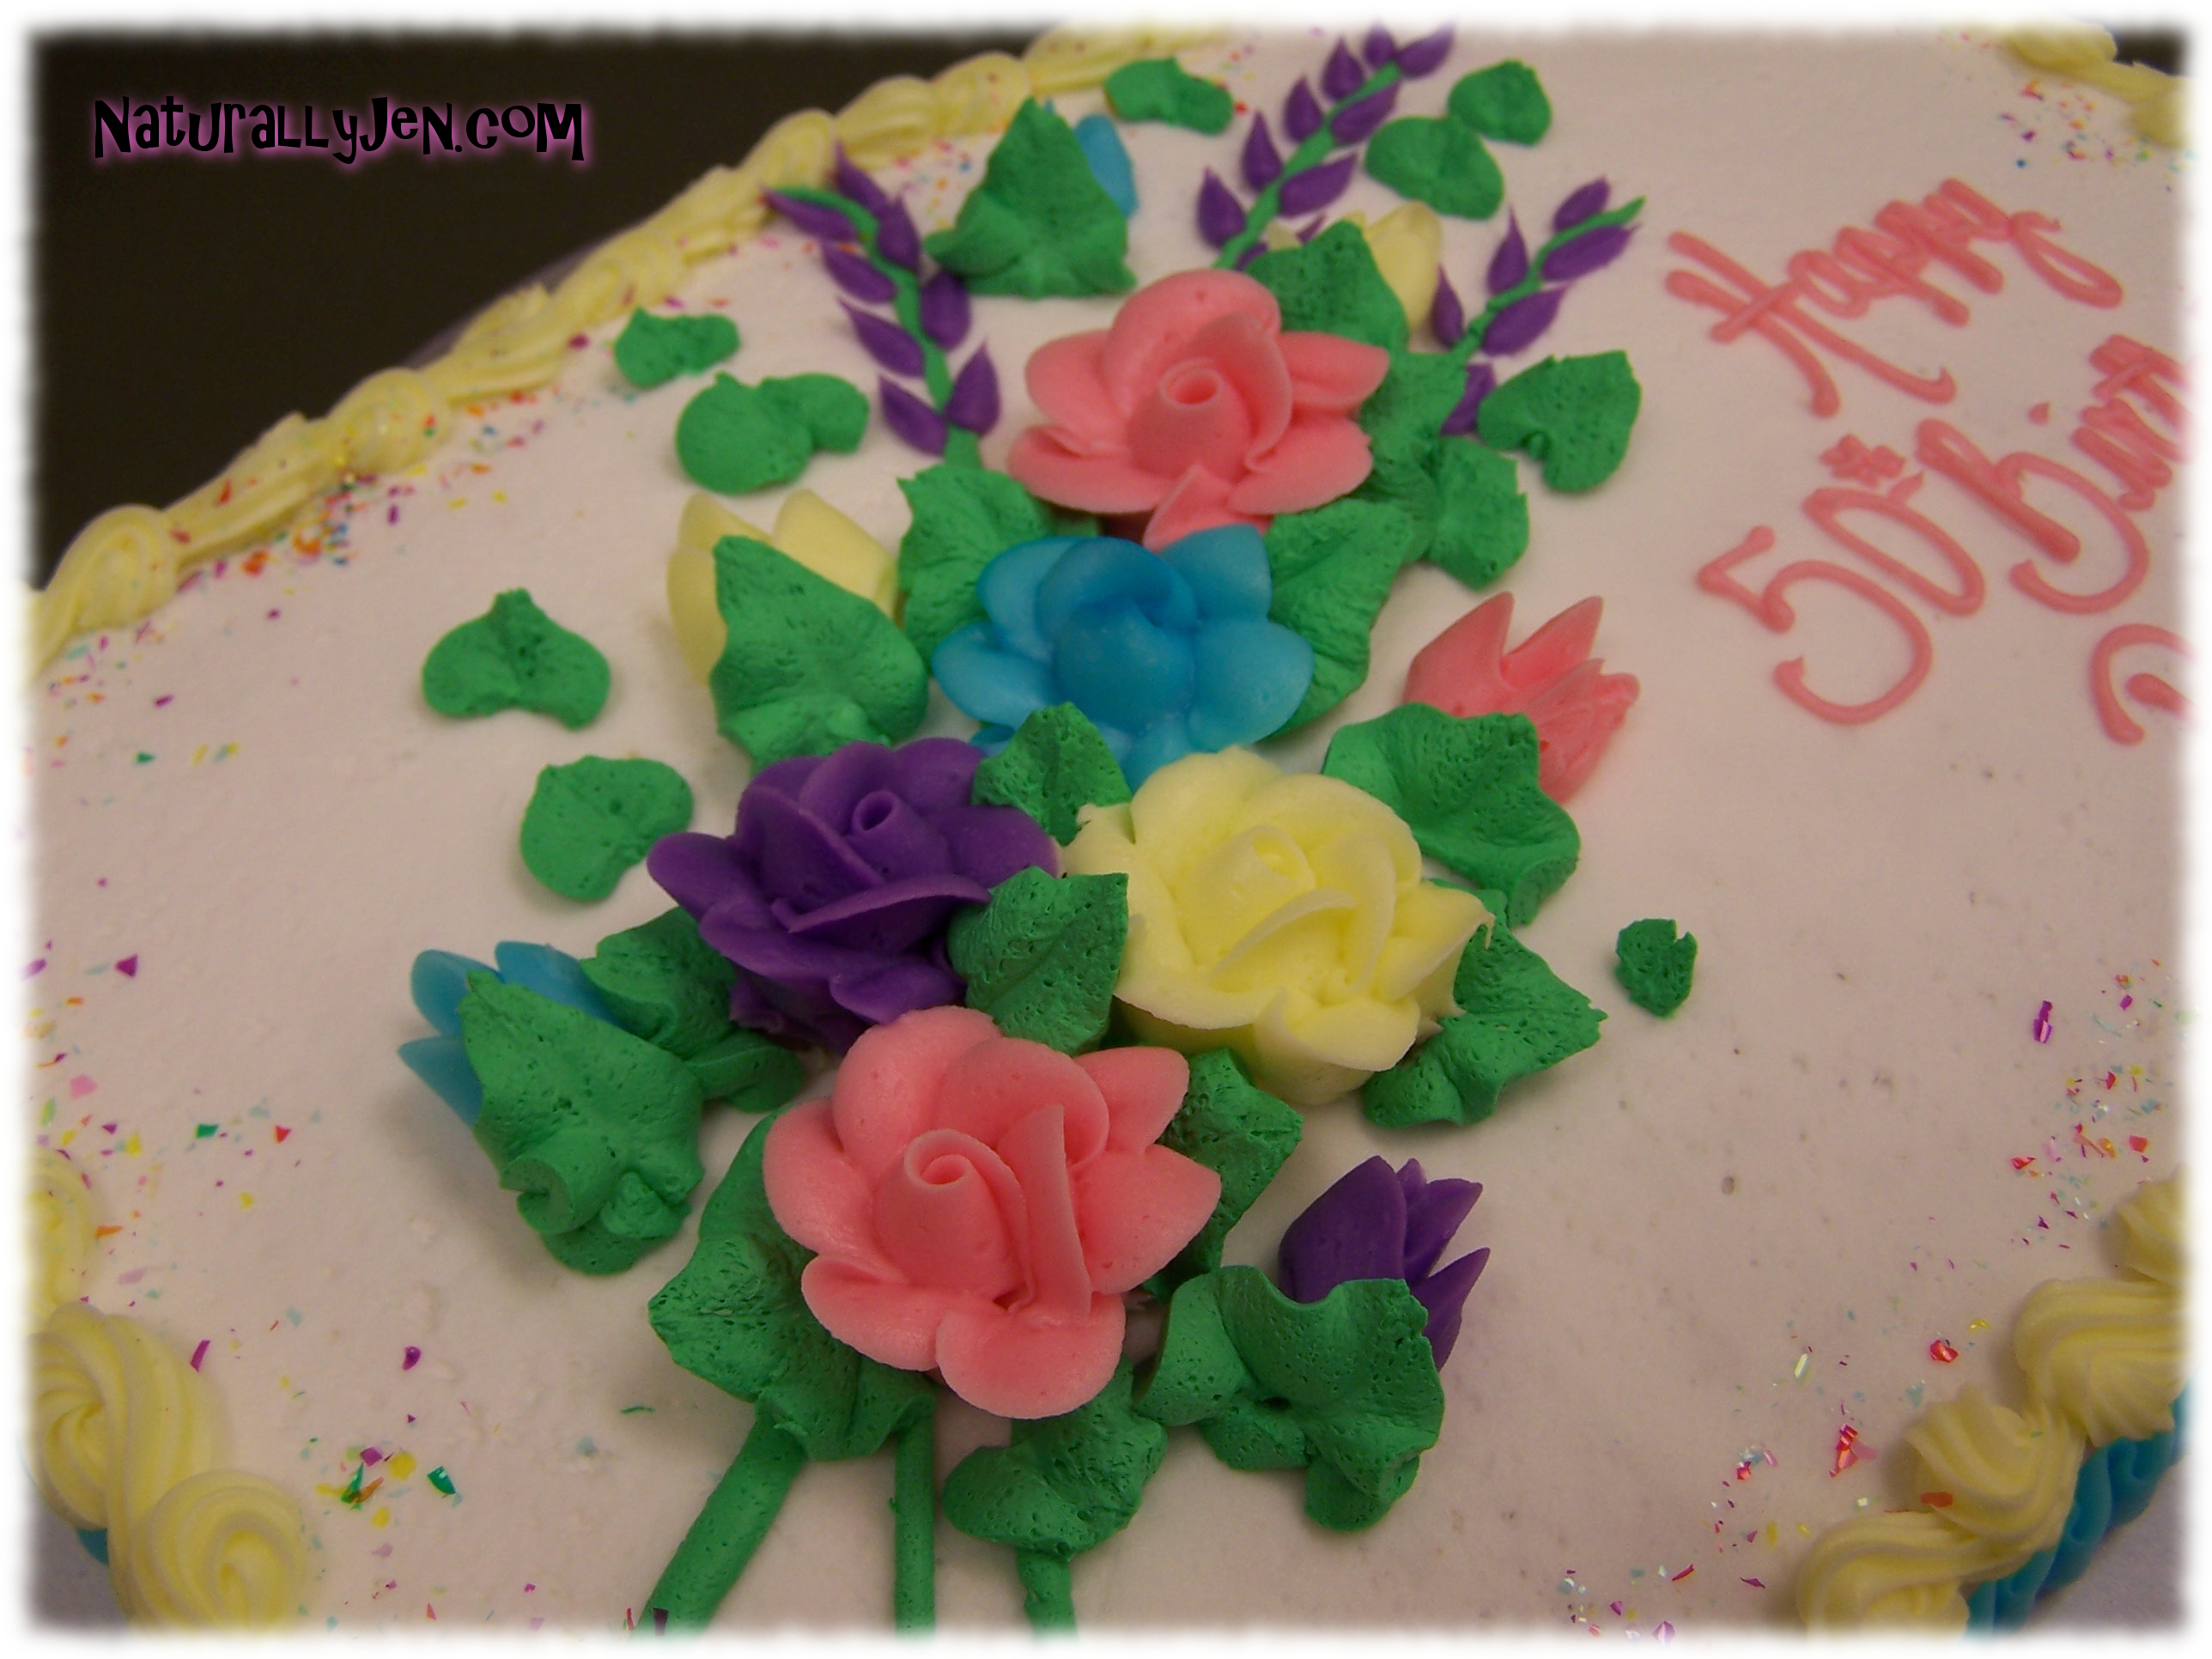 Frosting Flowers on Birthday Cake